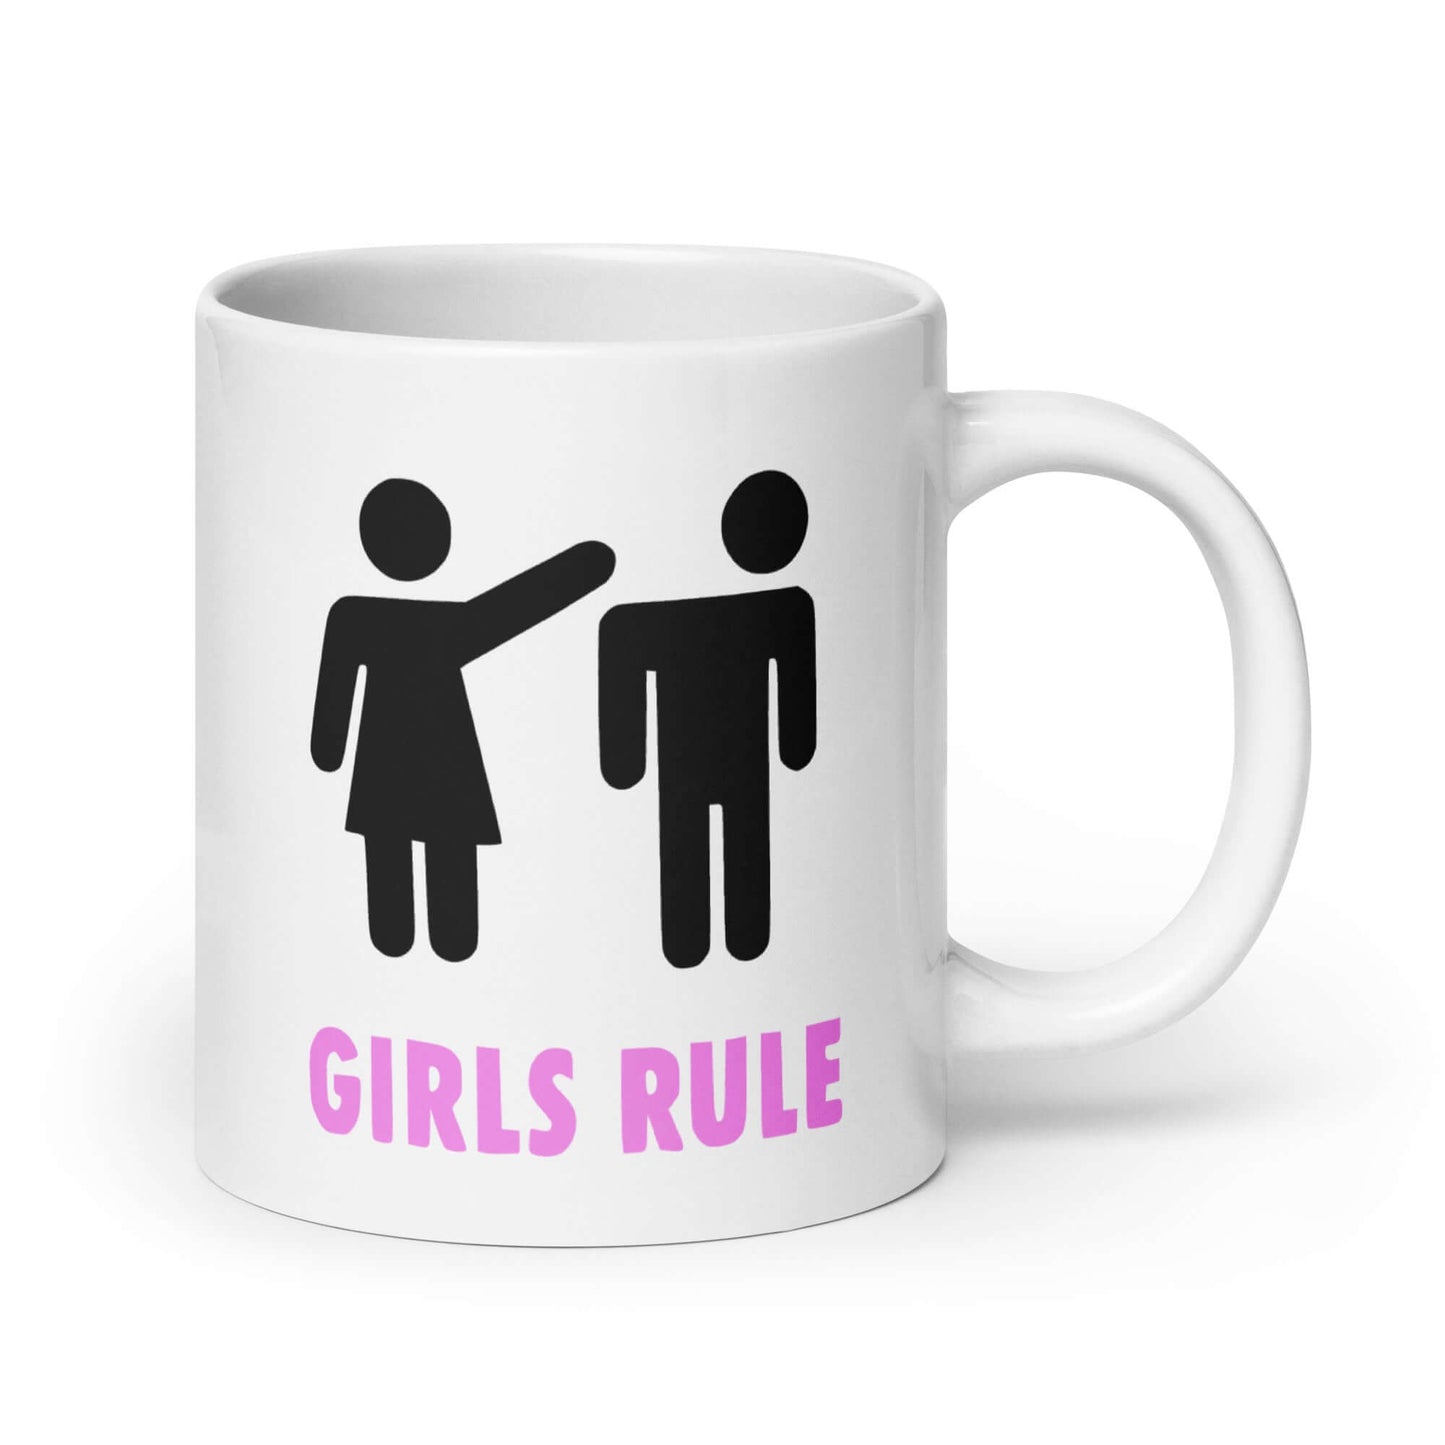 Girls rule girl power funny mug